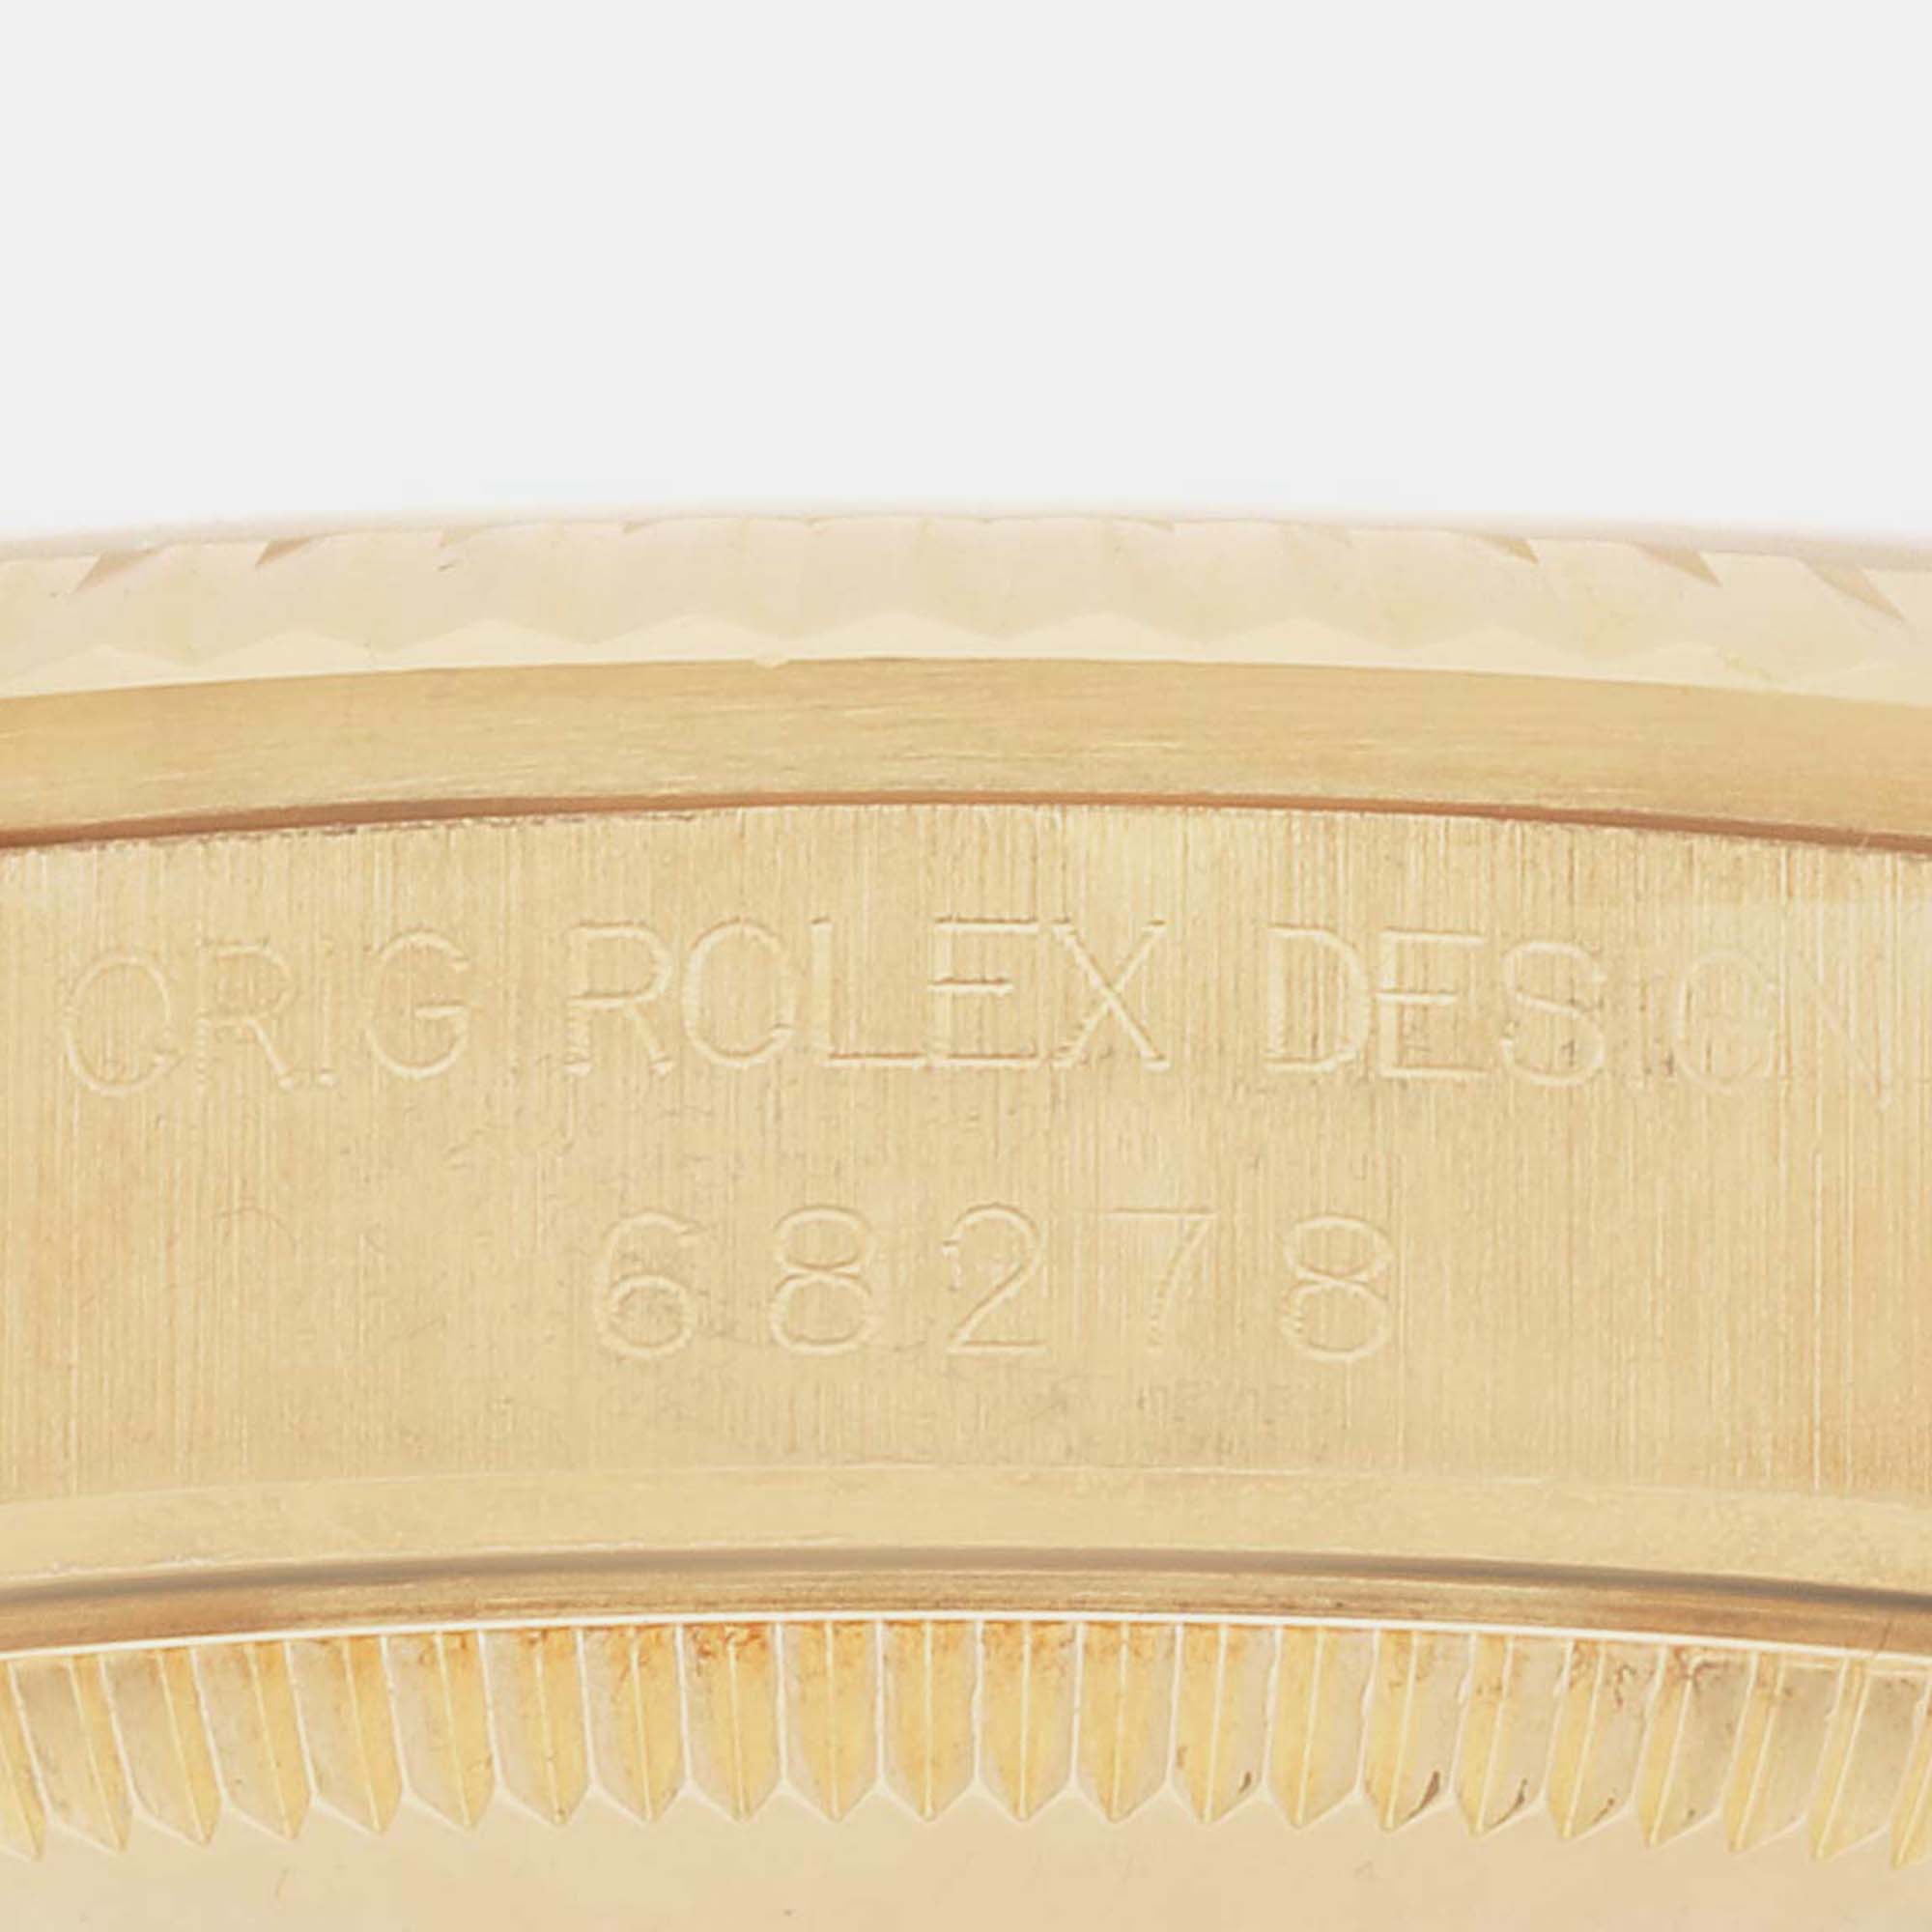 Rolex President Midsize Yellow Gold Myriad Diamond Dial Ladies Watch 68278 31 Mm